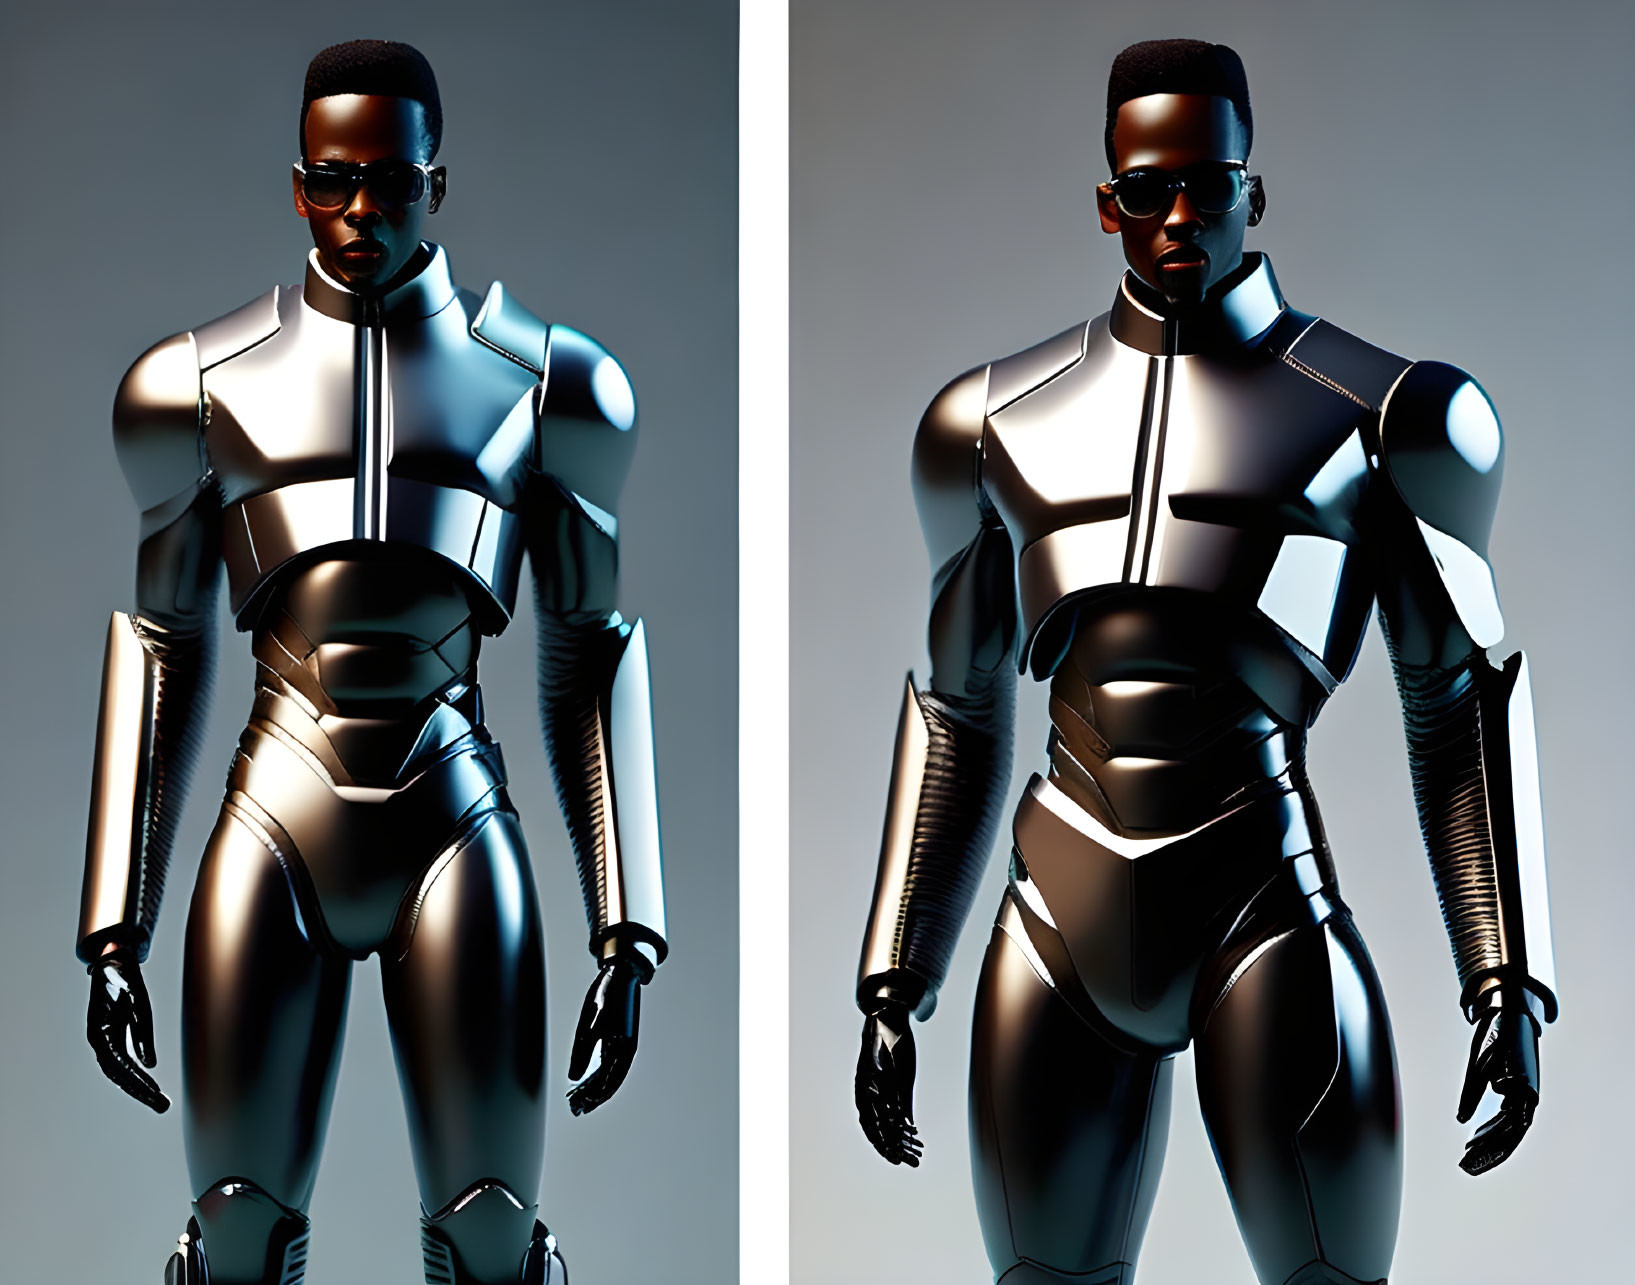 Futuristic mannequin figure in dark armor on gray background